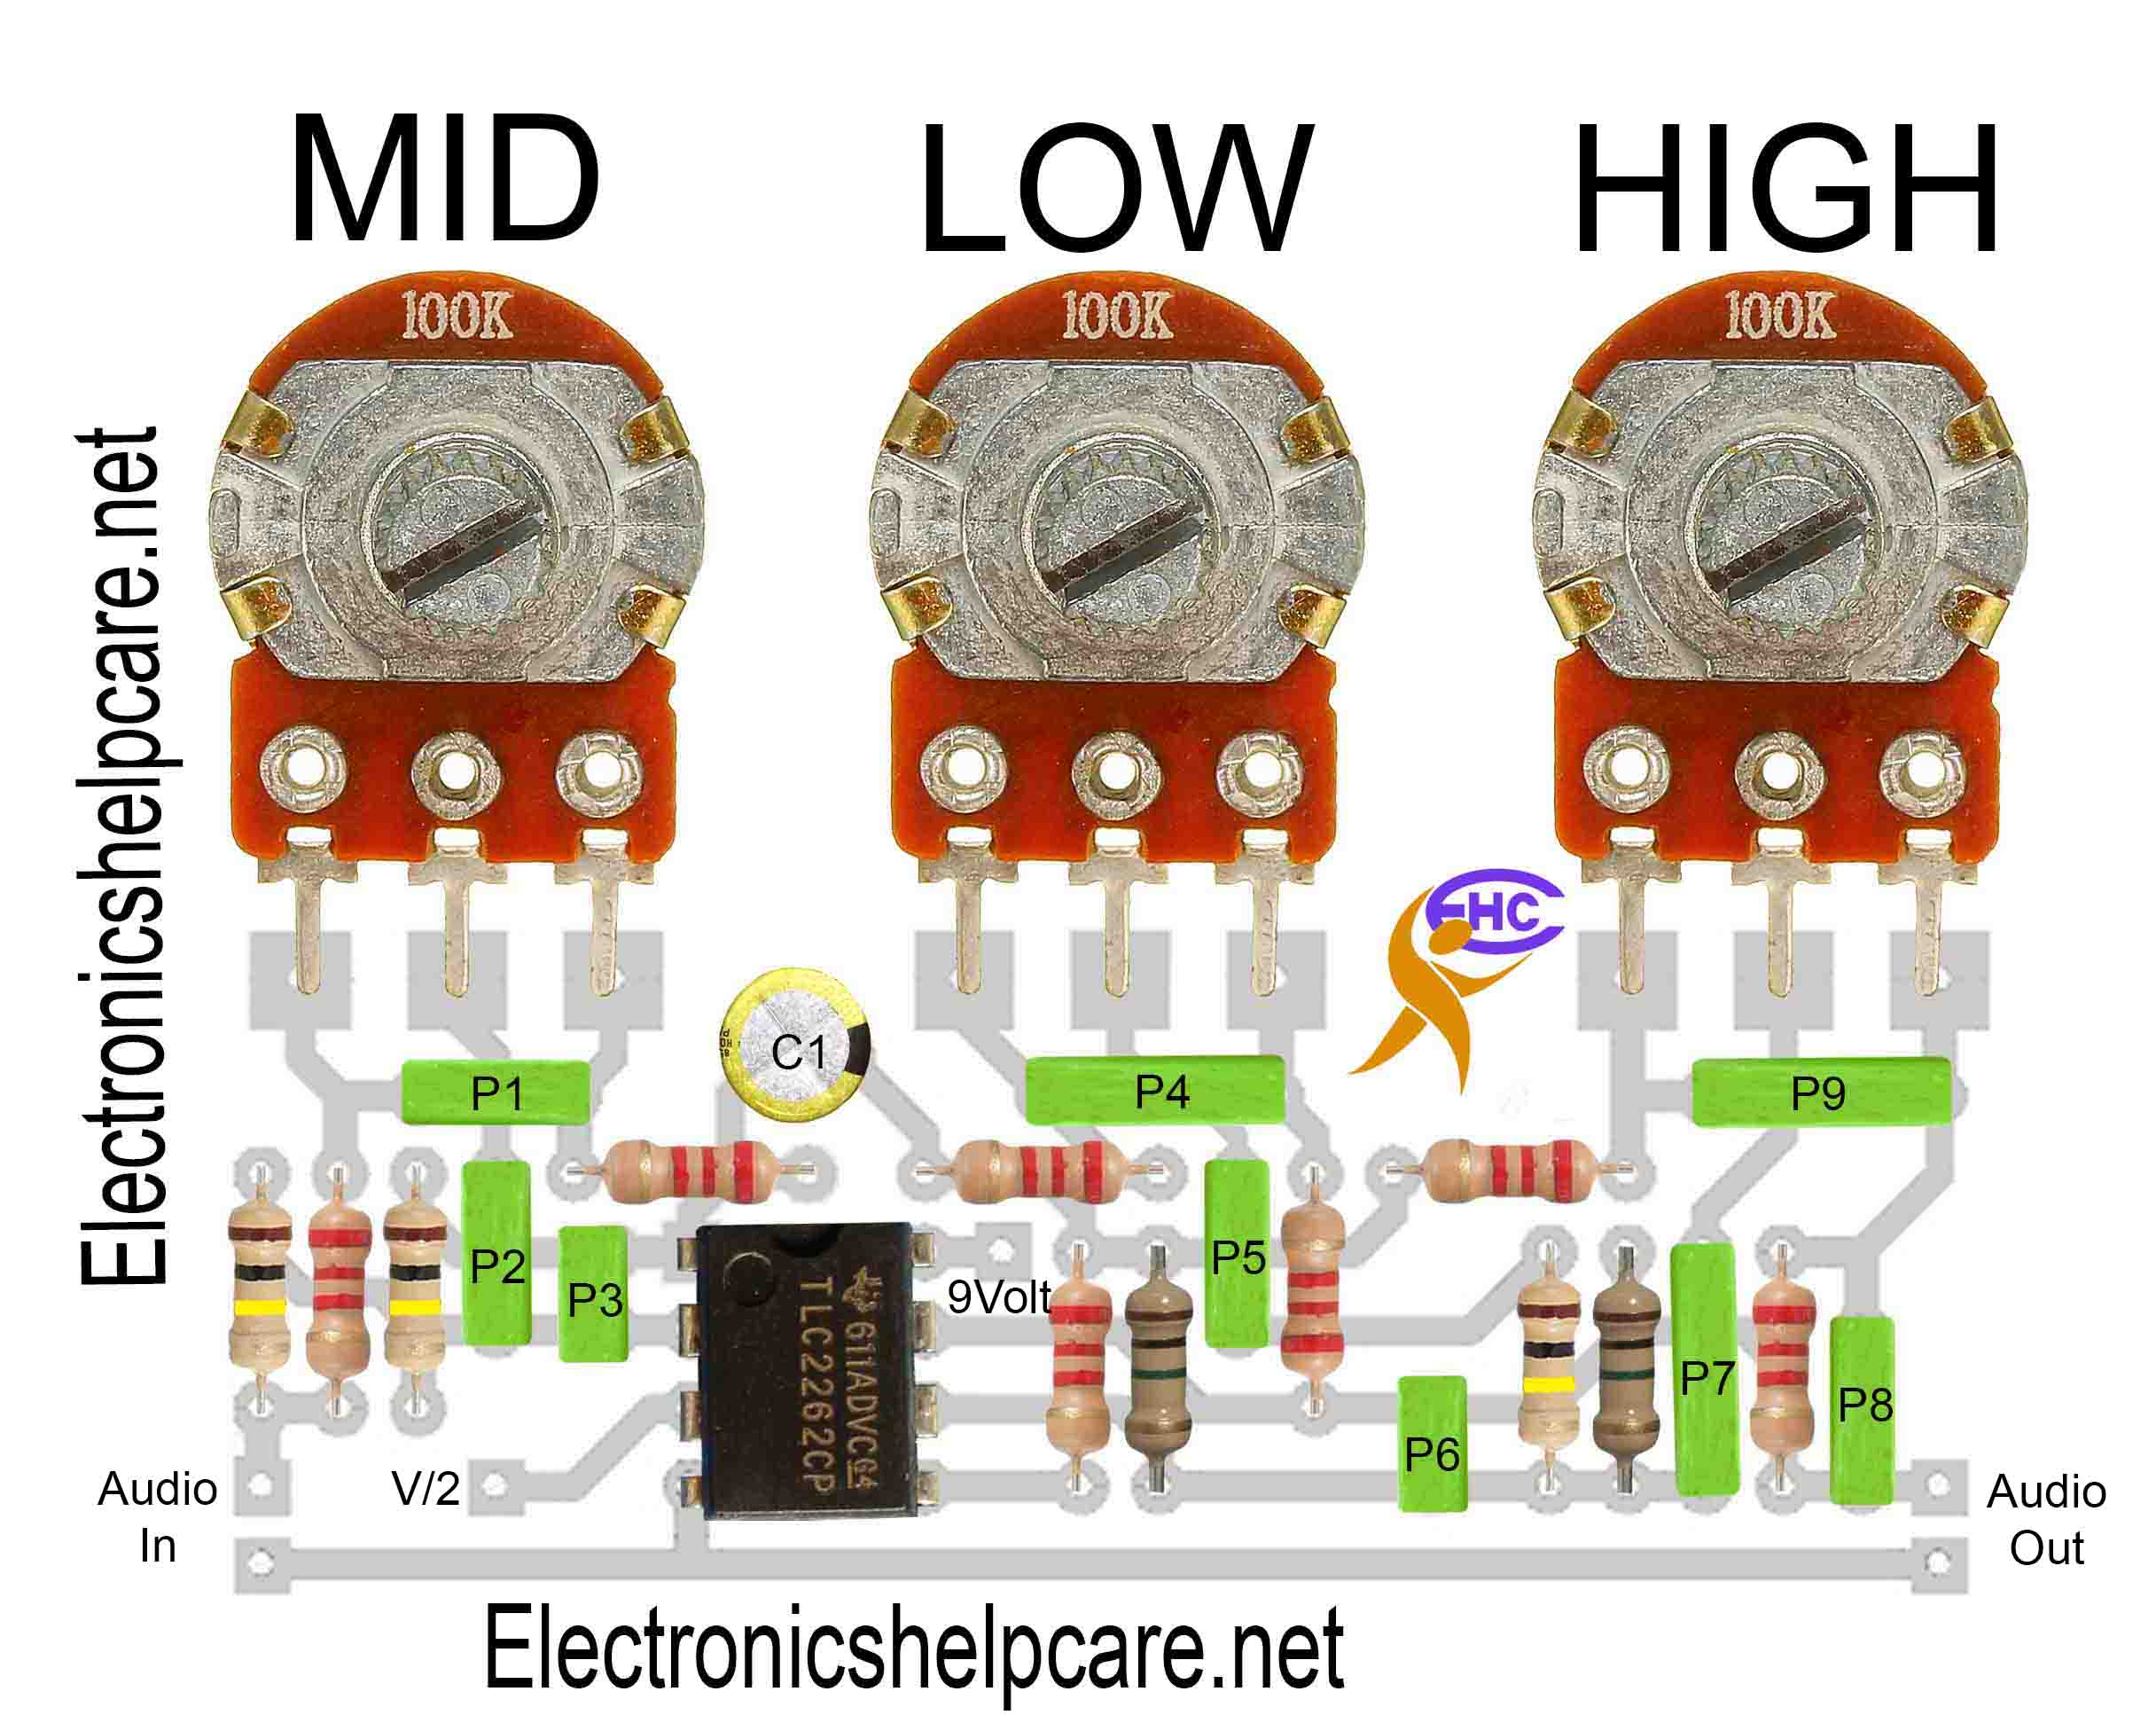 Mid low high circuit diagram